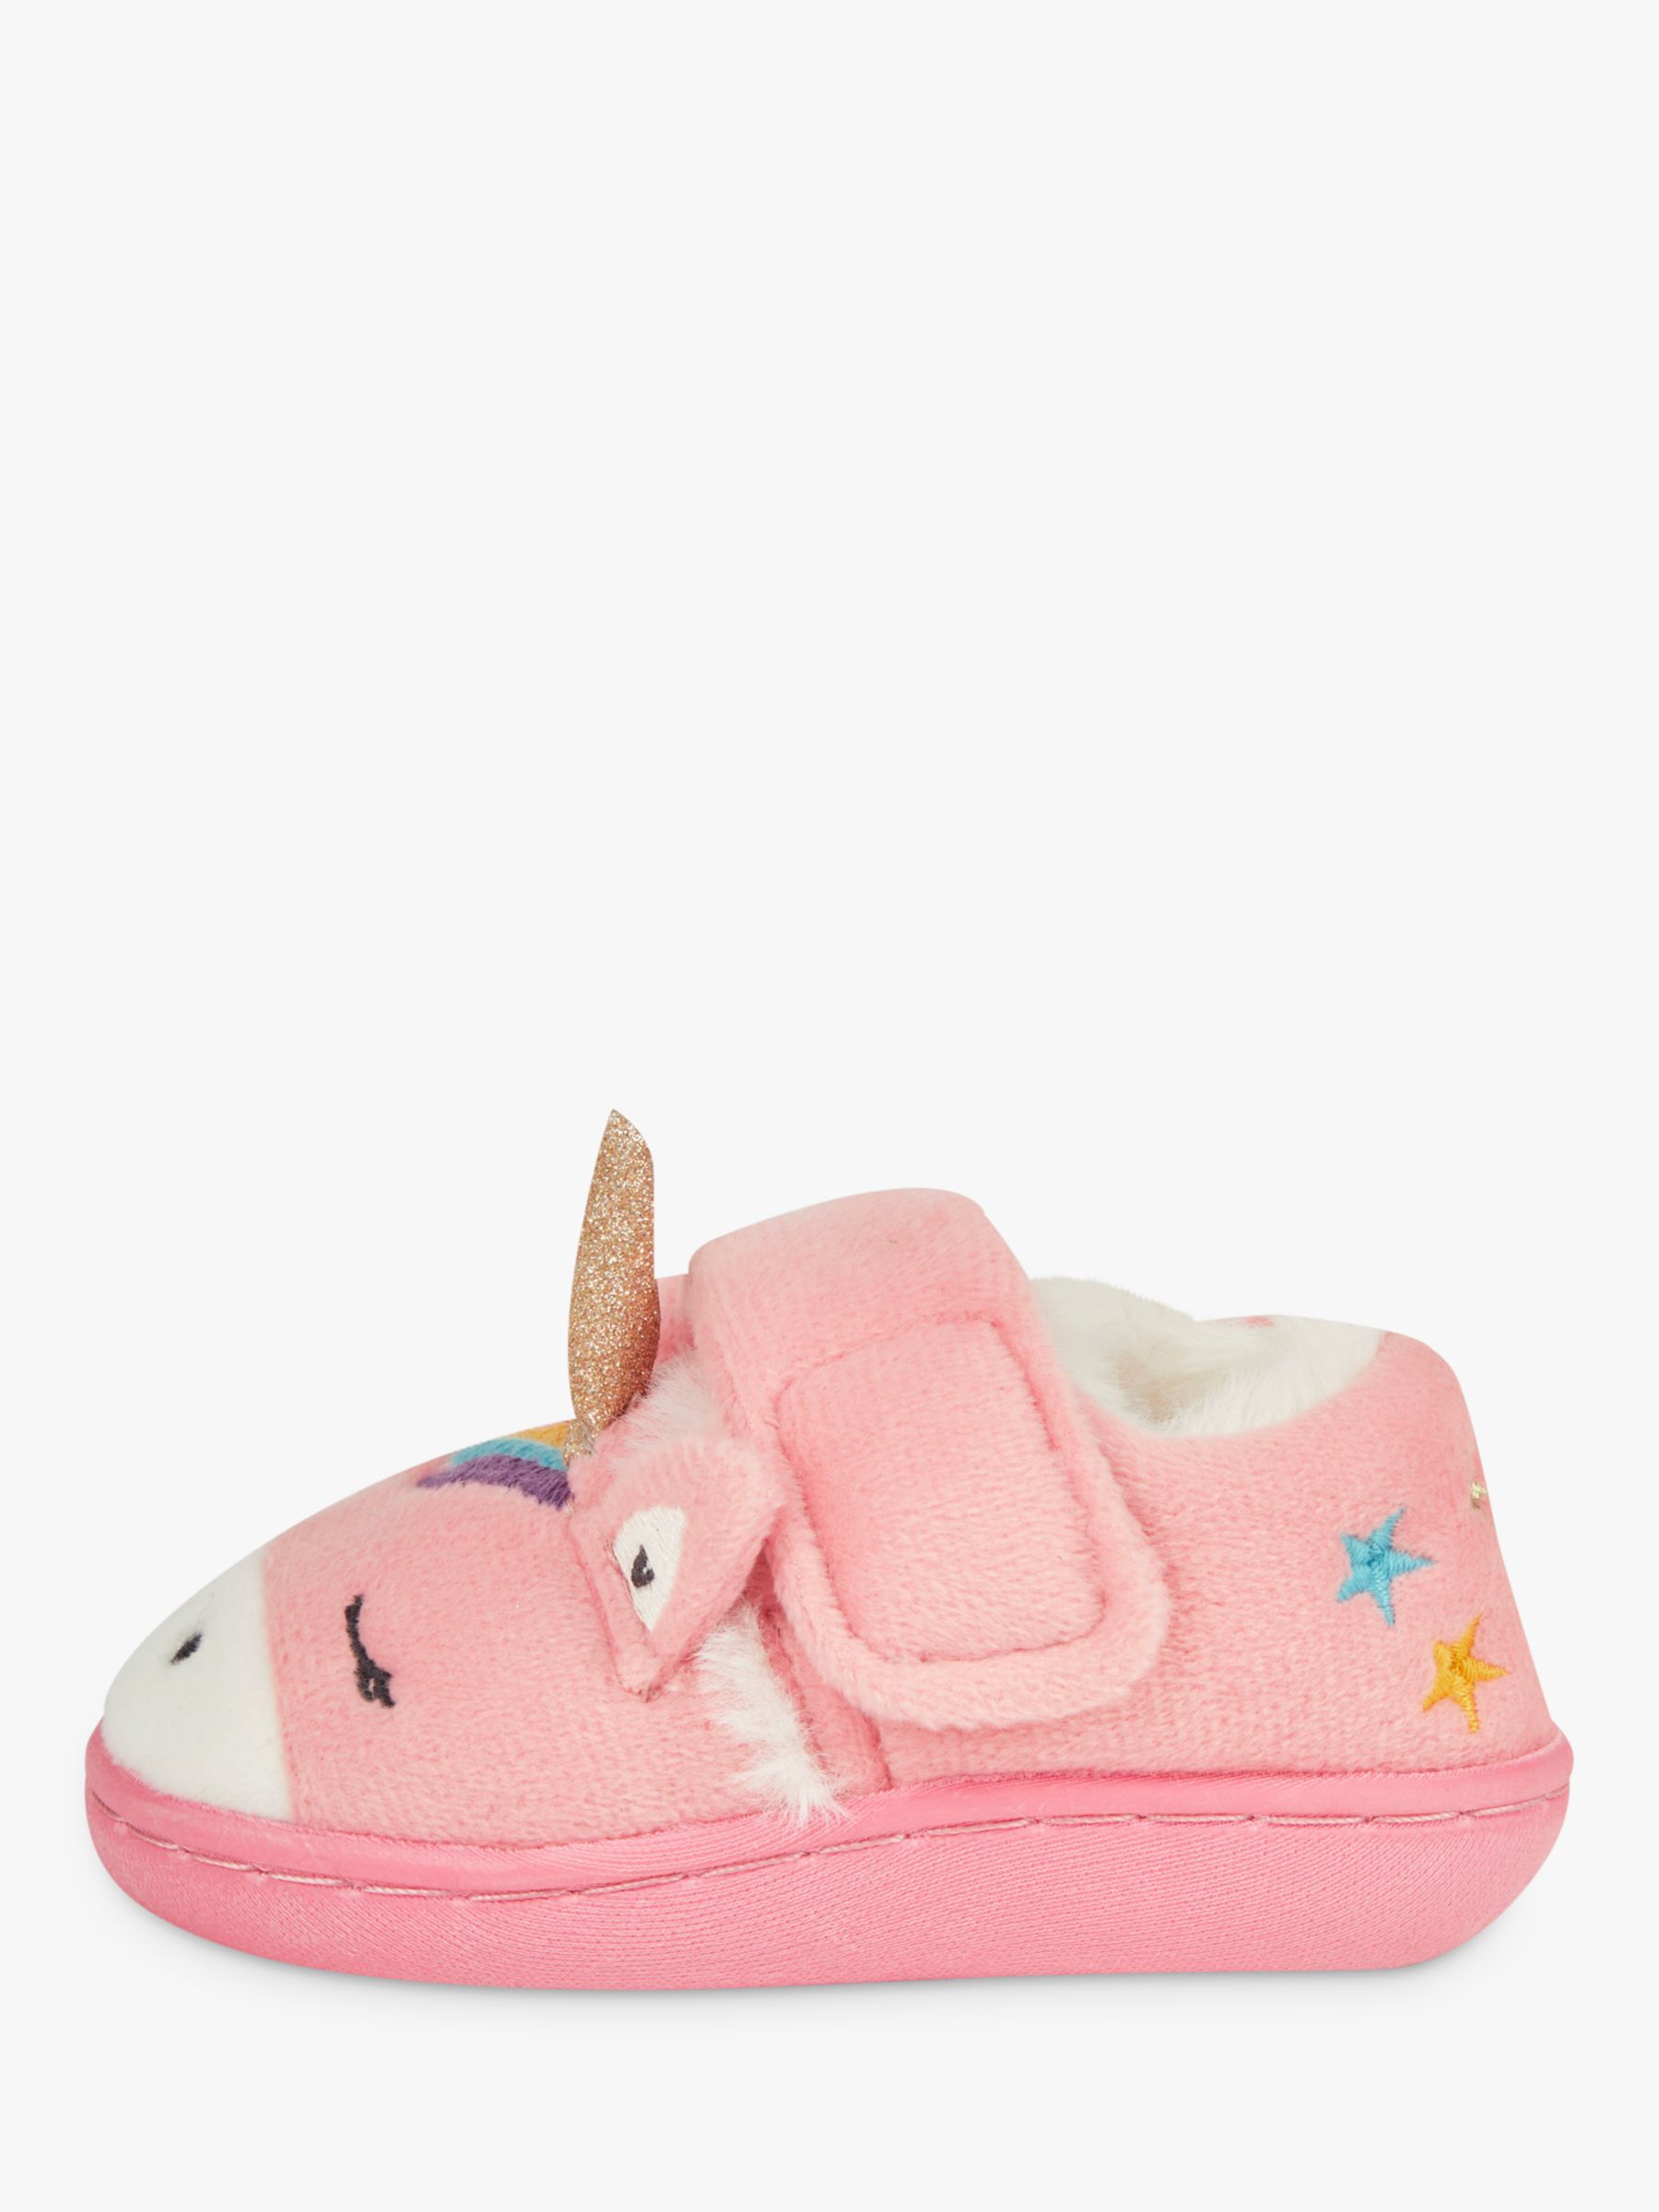 JoJo Maman Bébé Unicorn Easy-On Slipper Shoes, Pink/Multi, 0-6 months